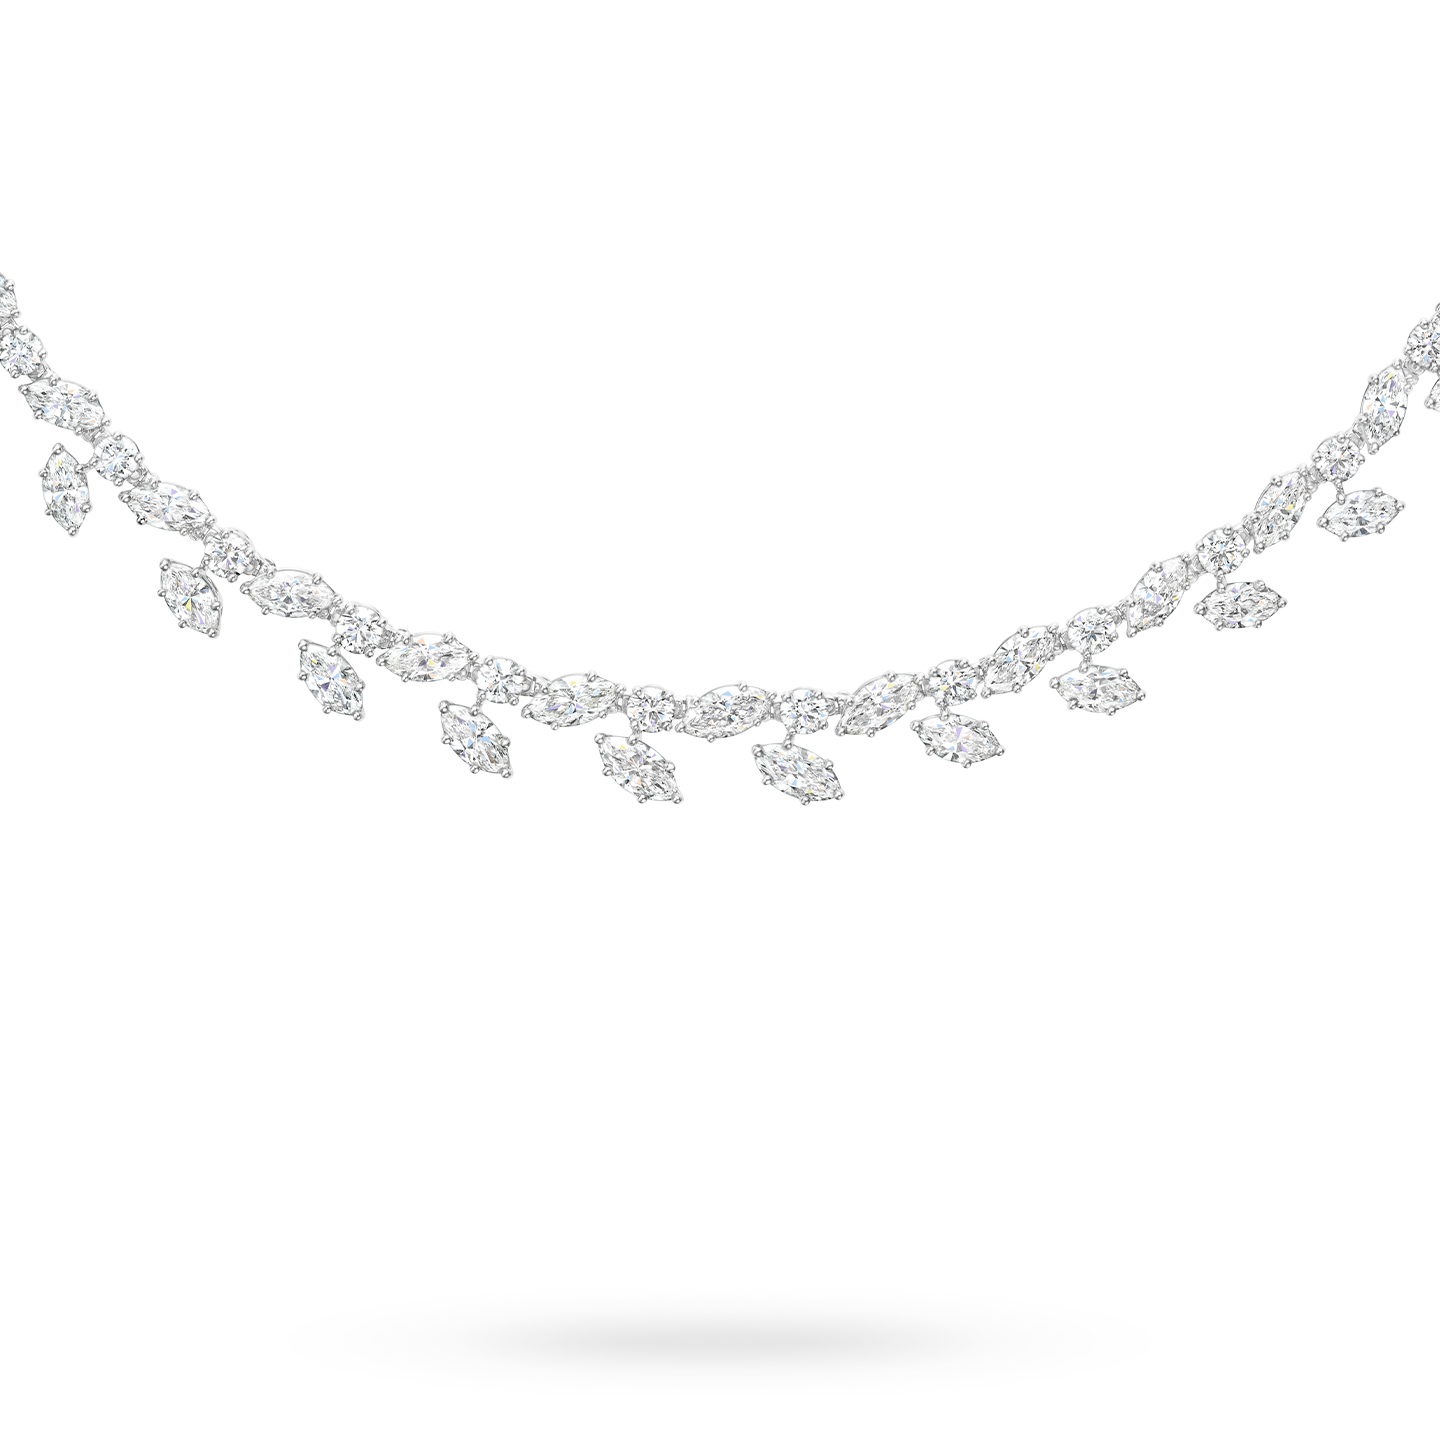 Winston Cluster Sapphire and Diamond Pendant